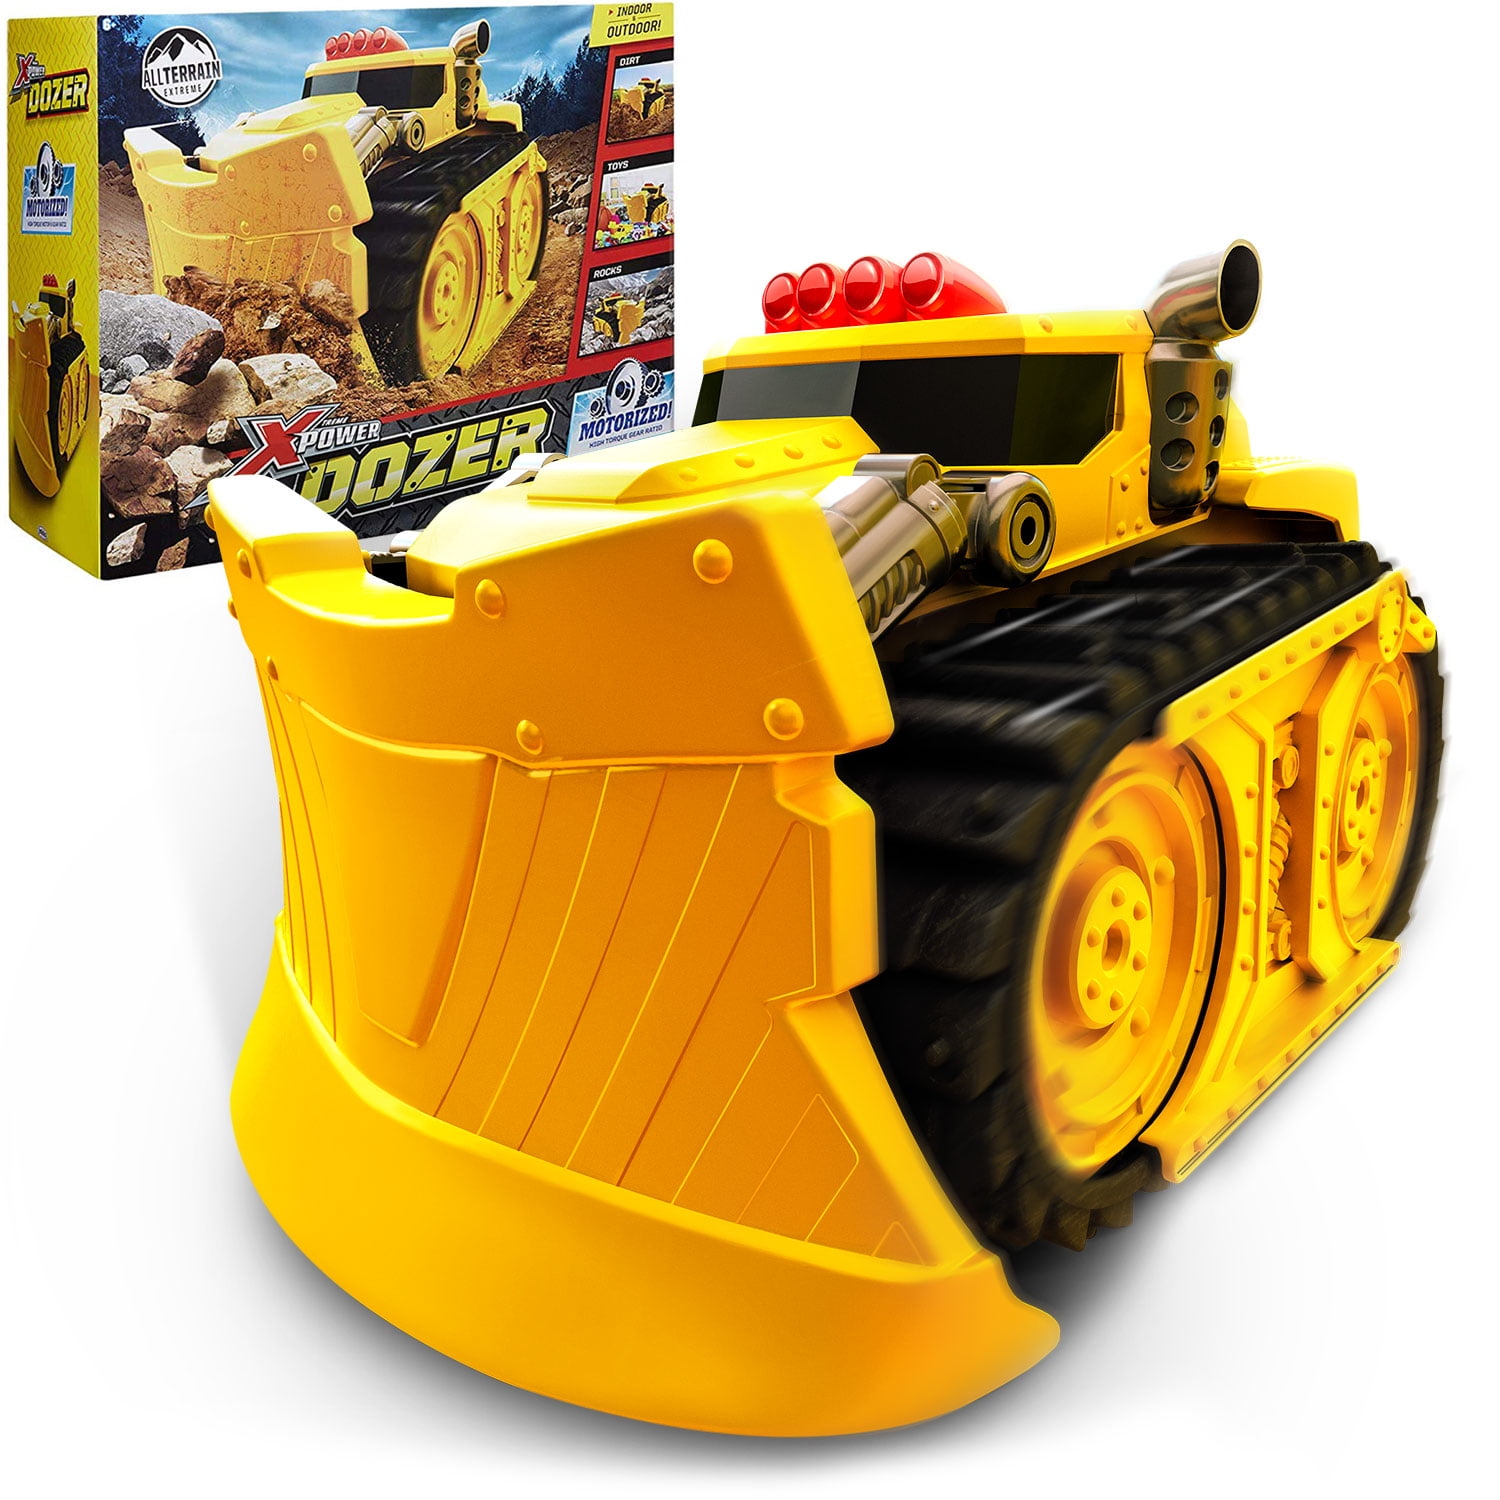 Tonka Tough Sturdy Steel Bulldozer Vehicle Construction Earth Work Toy Toys 